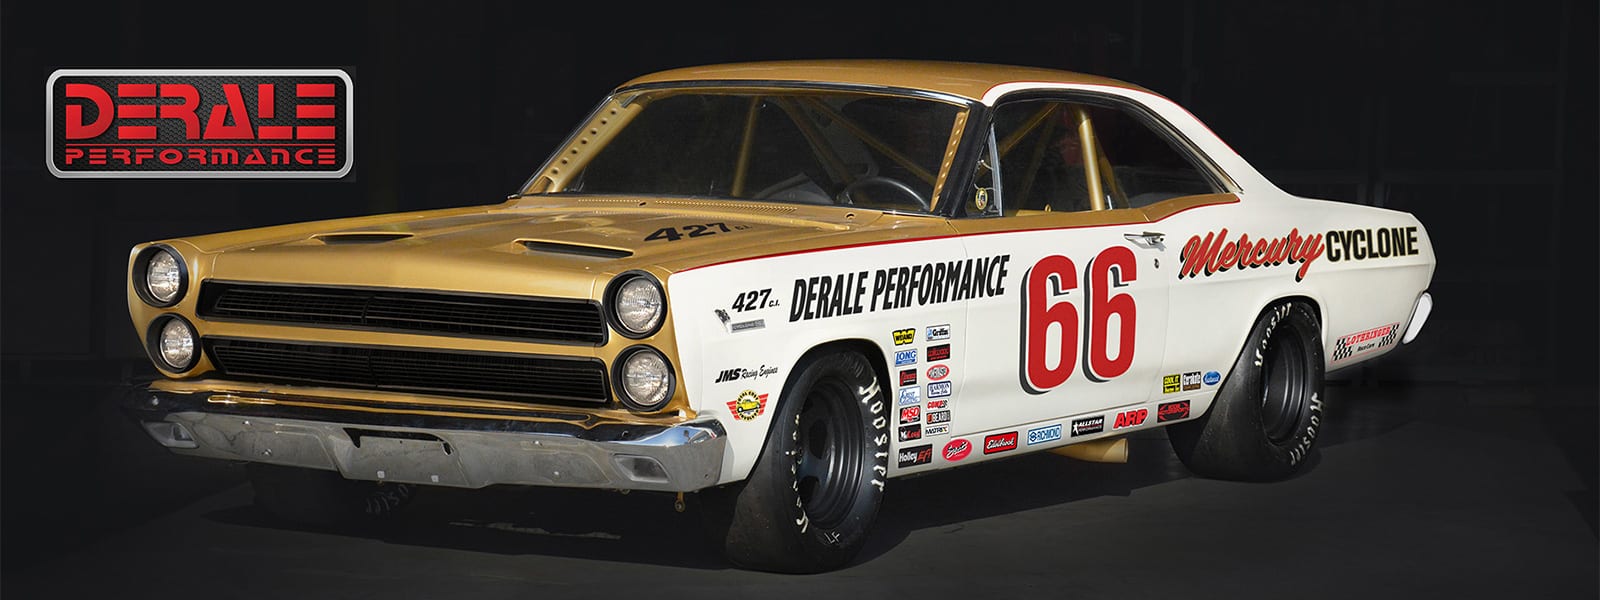 1966 Mercury Cyclone GT Derale Performance